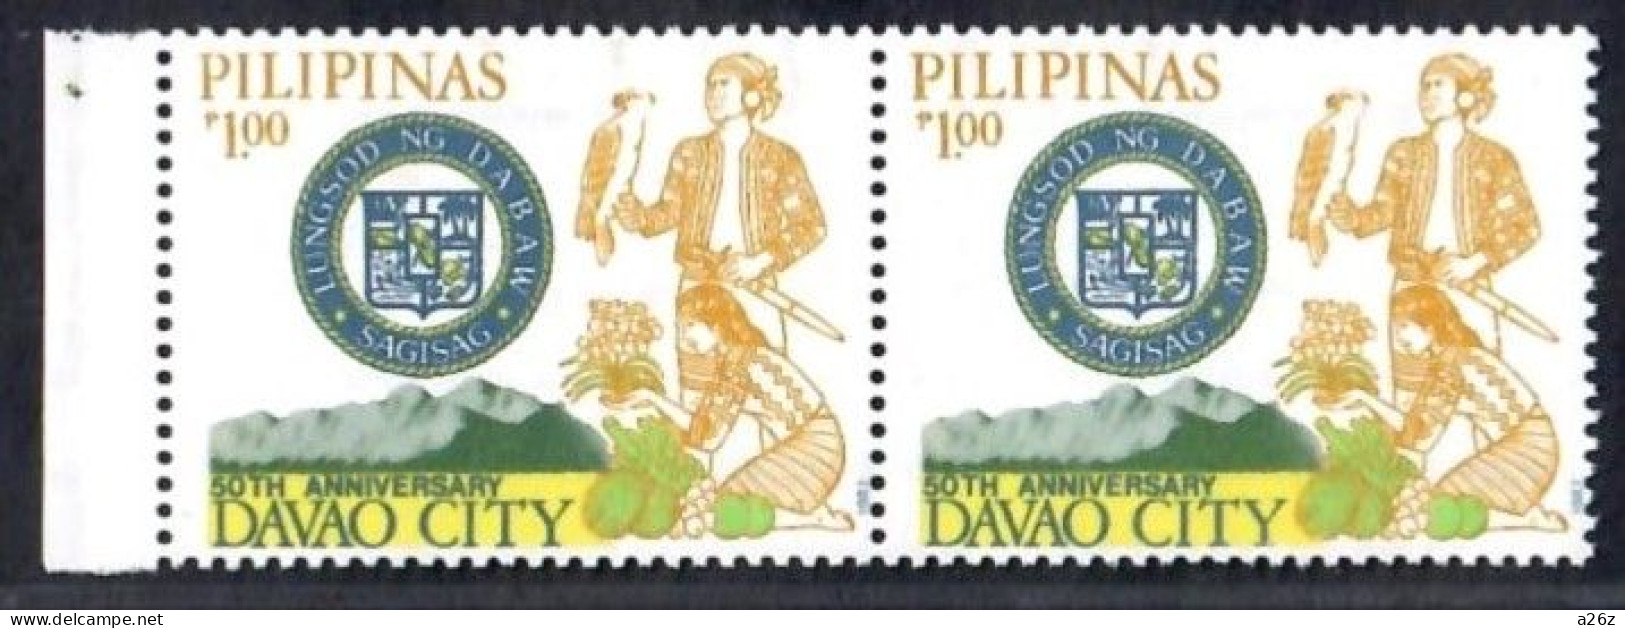 Philippines 1987 Davao City, 50th Anniv. Falconer, Woman Planting Etc. Marginal Horiz. Pair 1X 2V MNH - Filippine